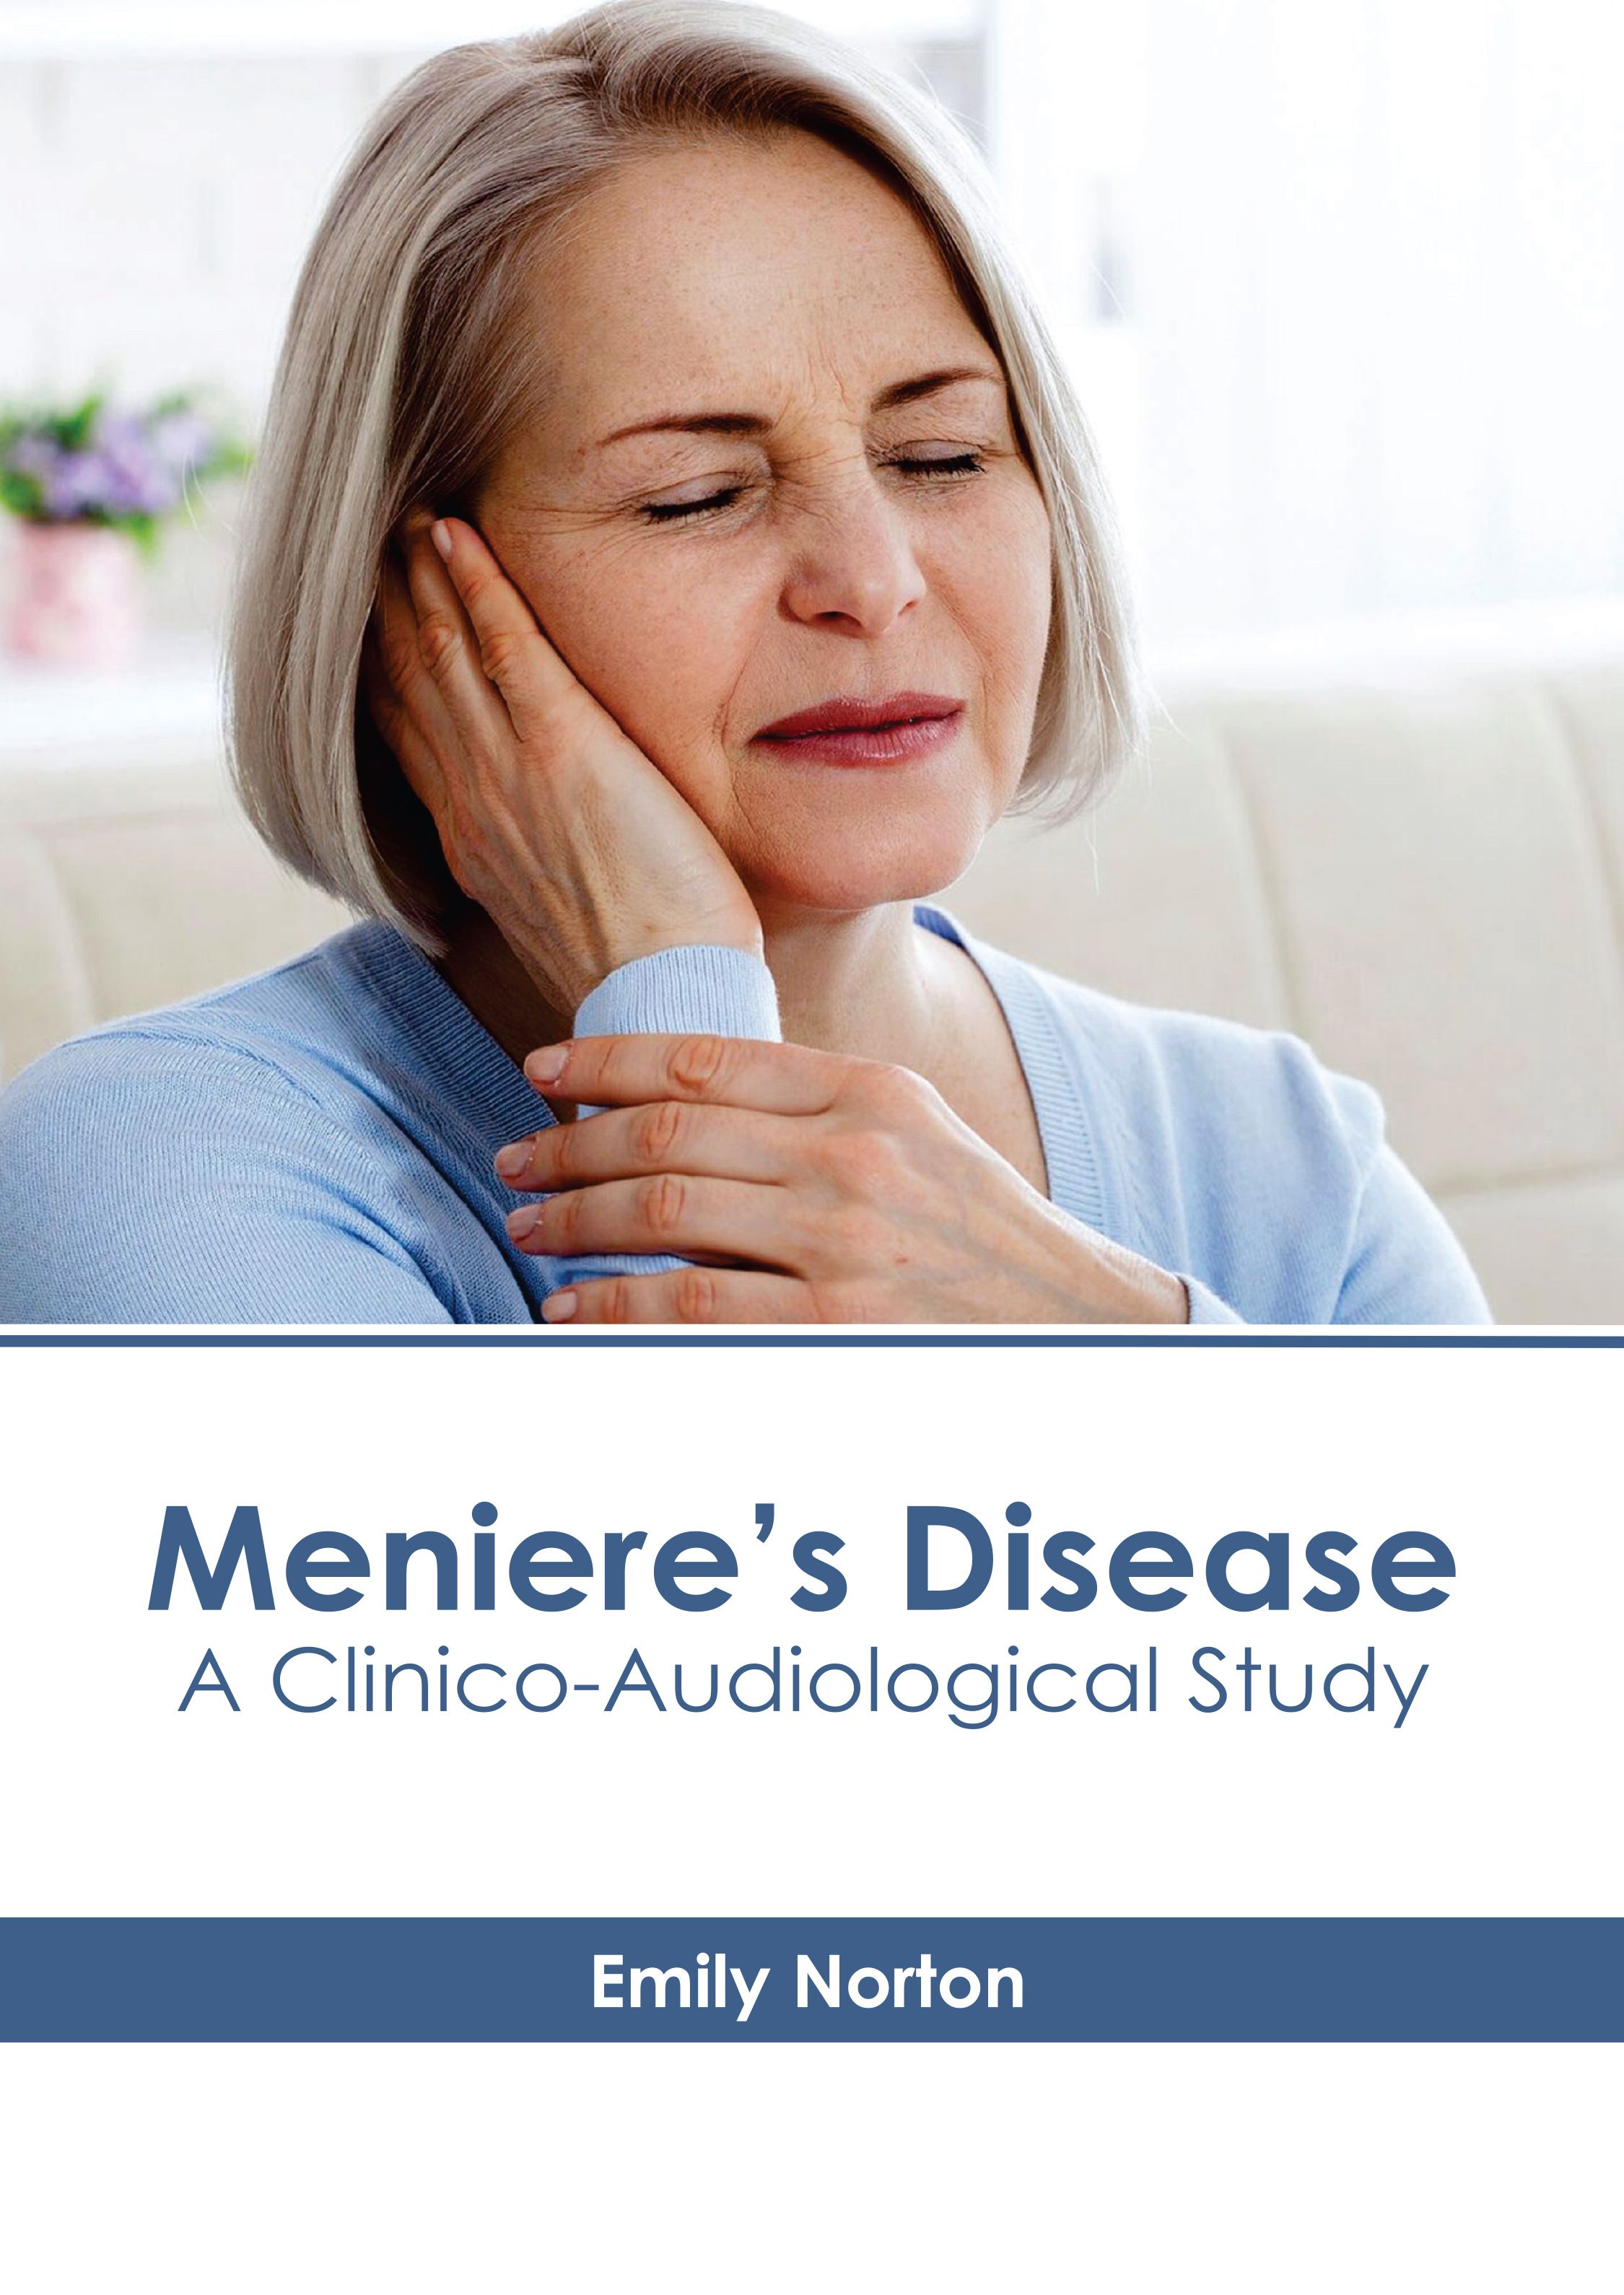 MENIERE’S DISEASE: A CLINICO-AUDIOLOGICAL STUDY